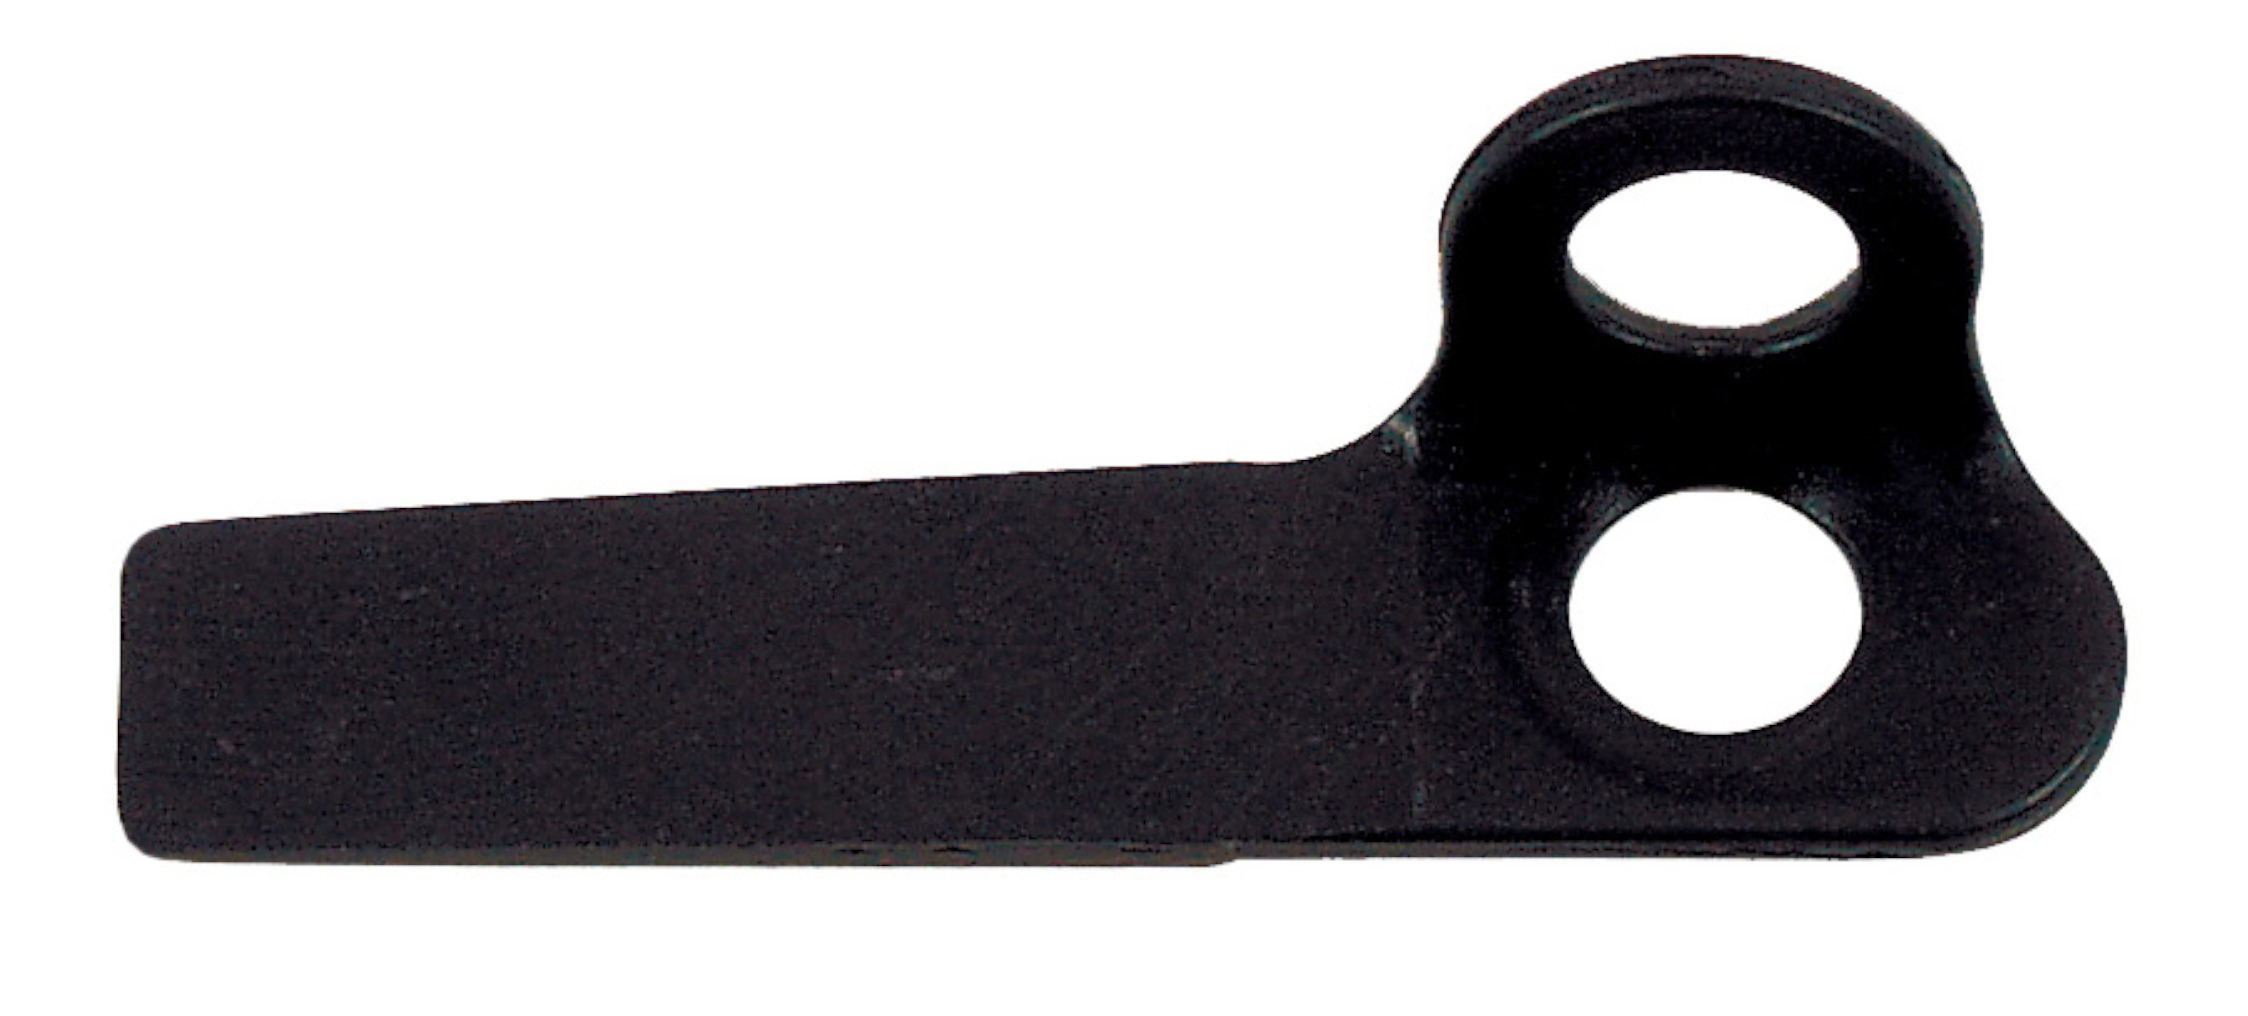 奧地利 AUSTRIALPIN Knifeblade rock piton 刀刃式岩釘 6.5公分/2.0mm